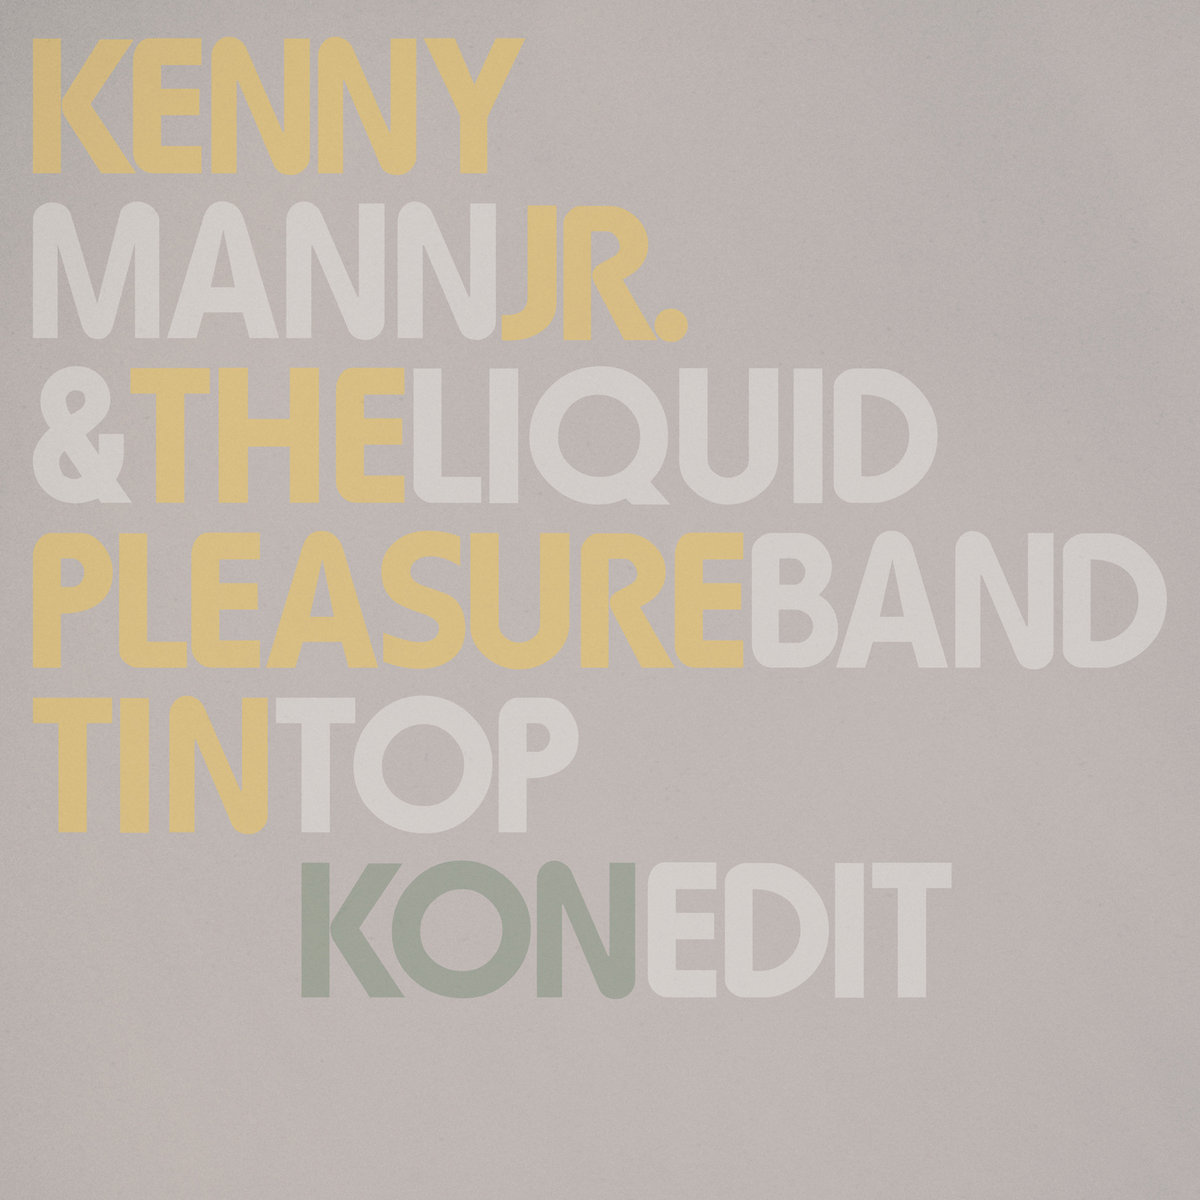 Kenny Mann & The Liquid Pleasure Band – Tin Top (Pt. 1 & 2 and Kon